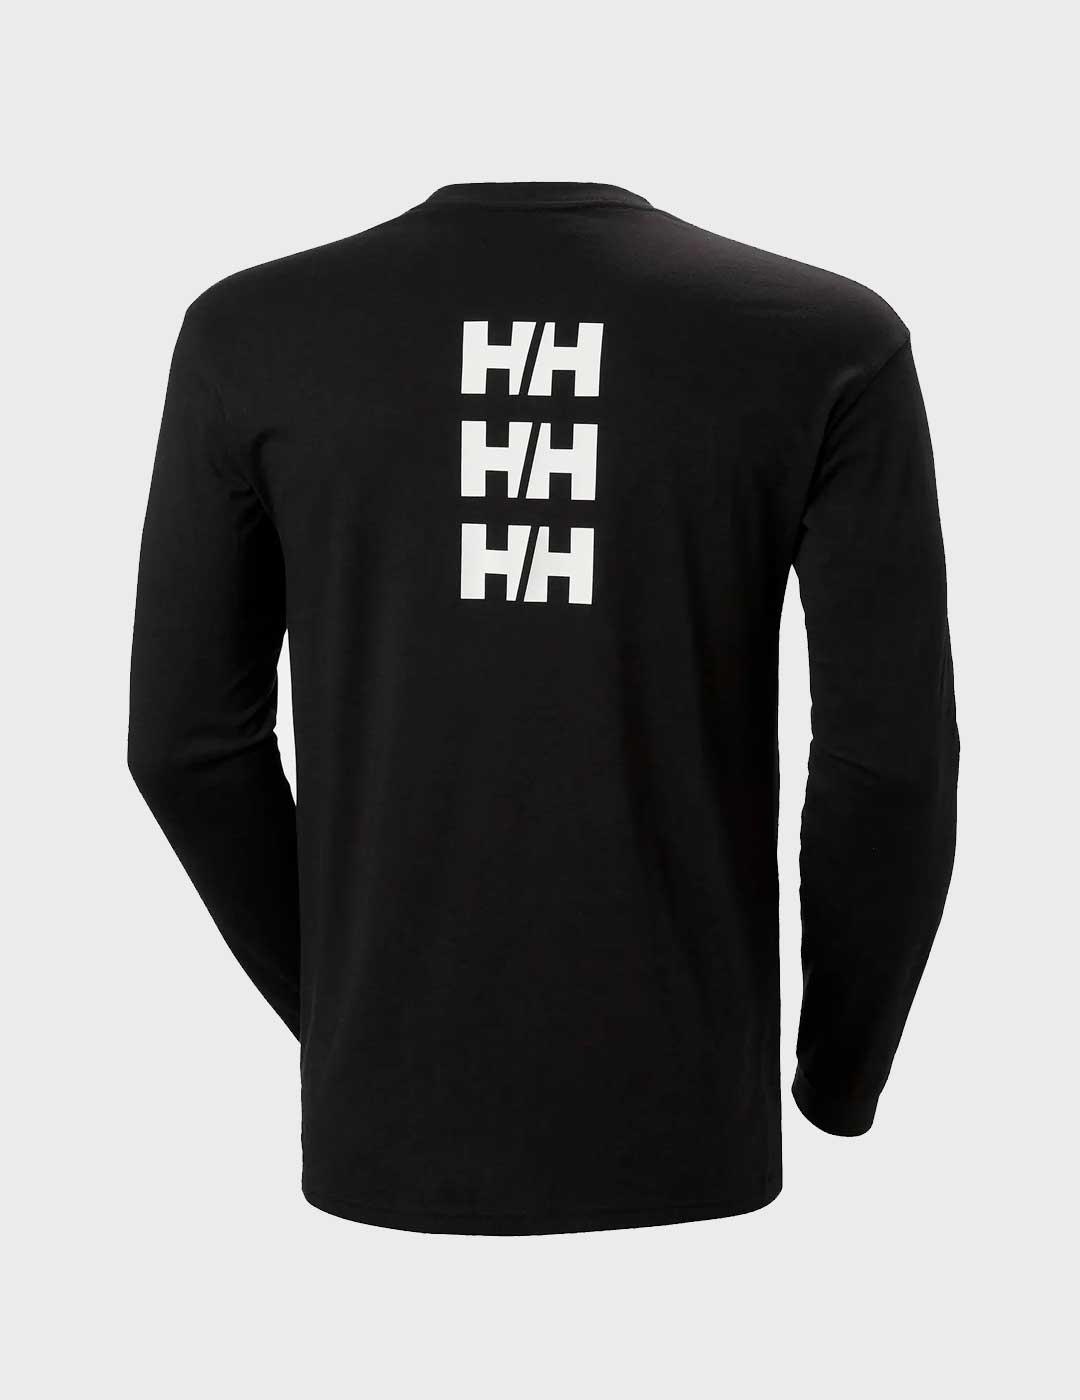 Camiseta Helly Hansen Yu Long Sleeve negra para hombre